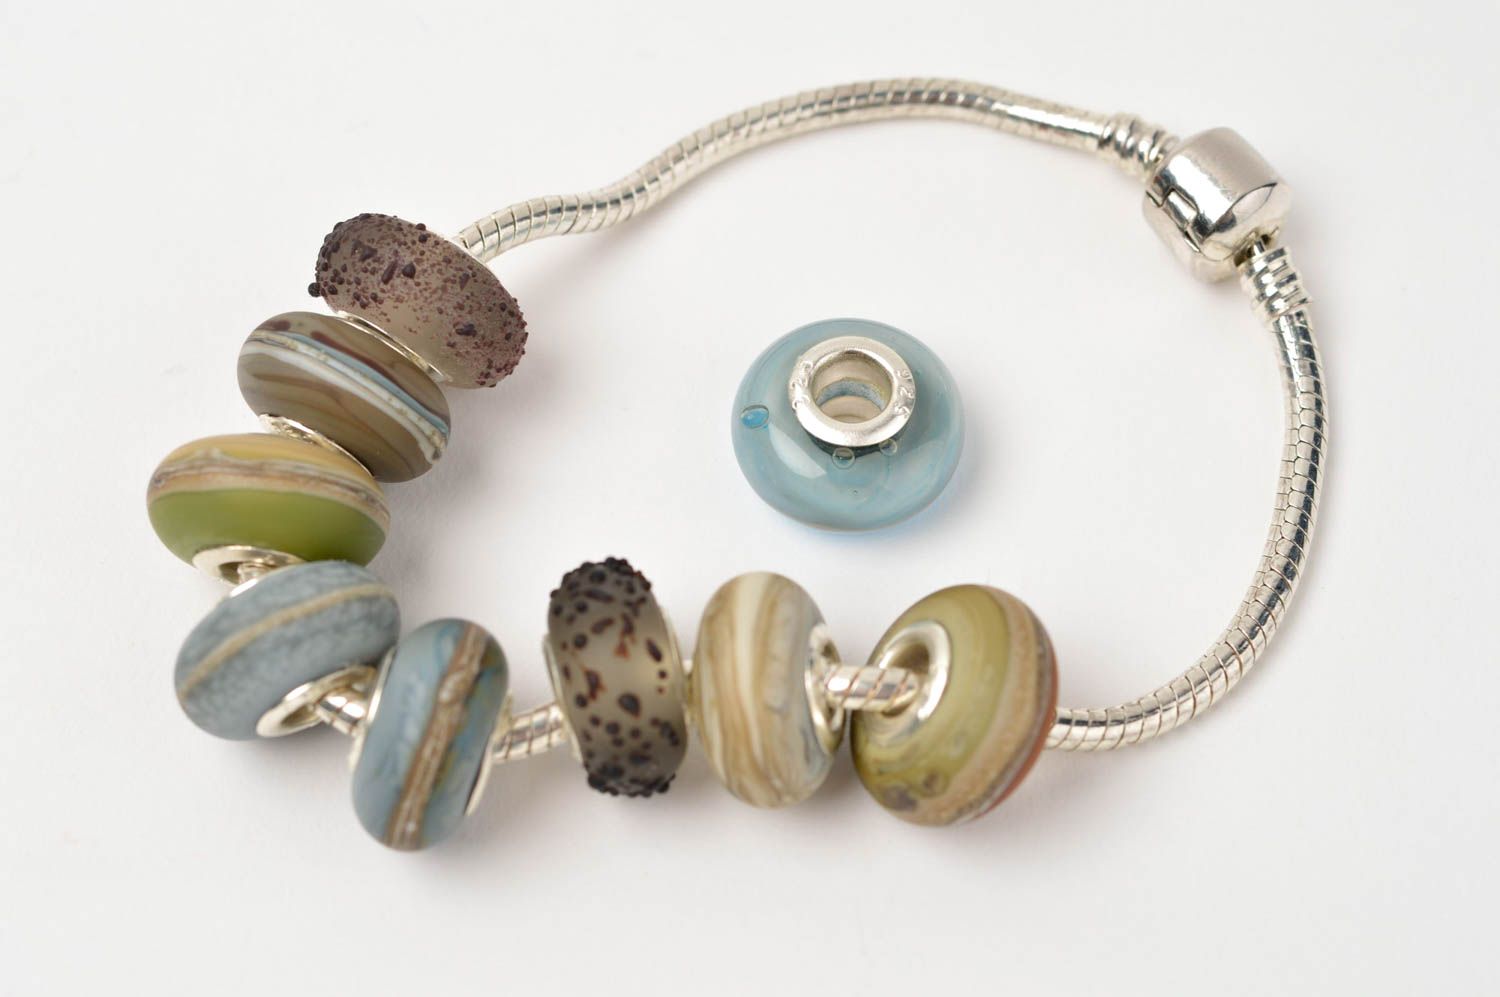 Unusual handmade glass bead jewelry findings jewelry making supplies gift ideas photo 4